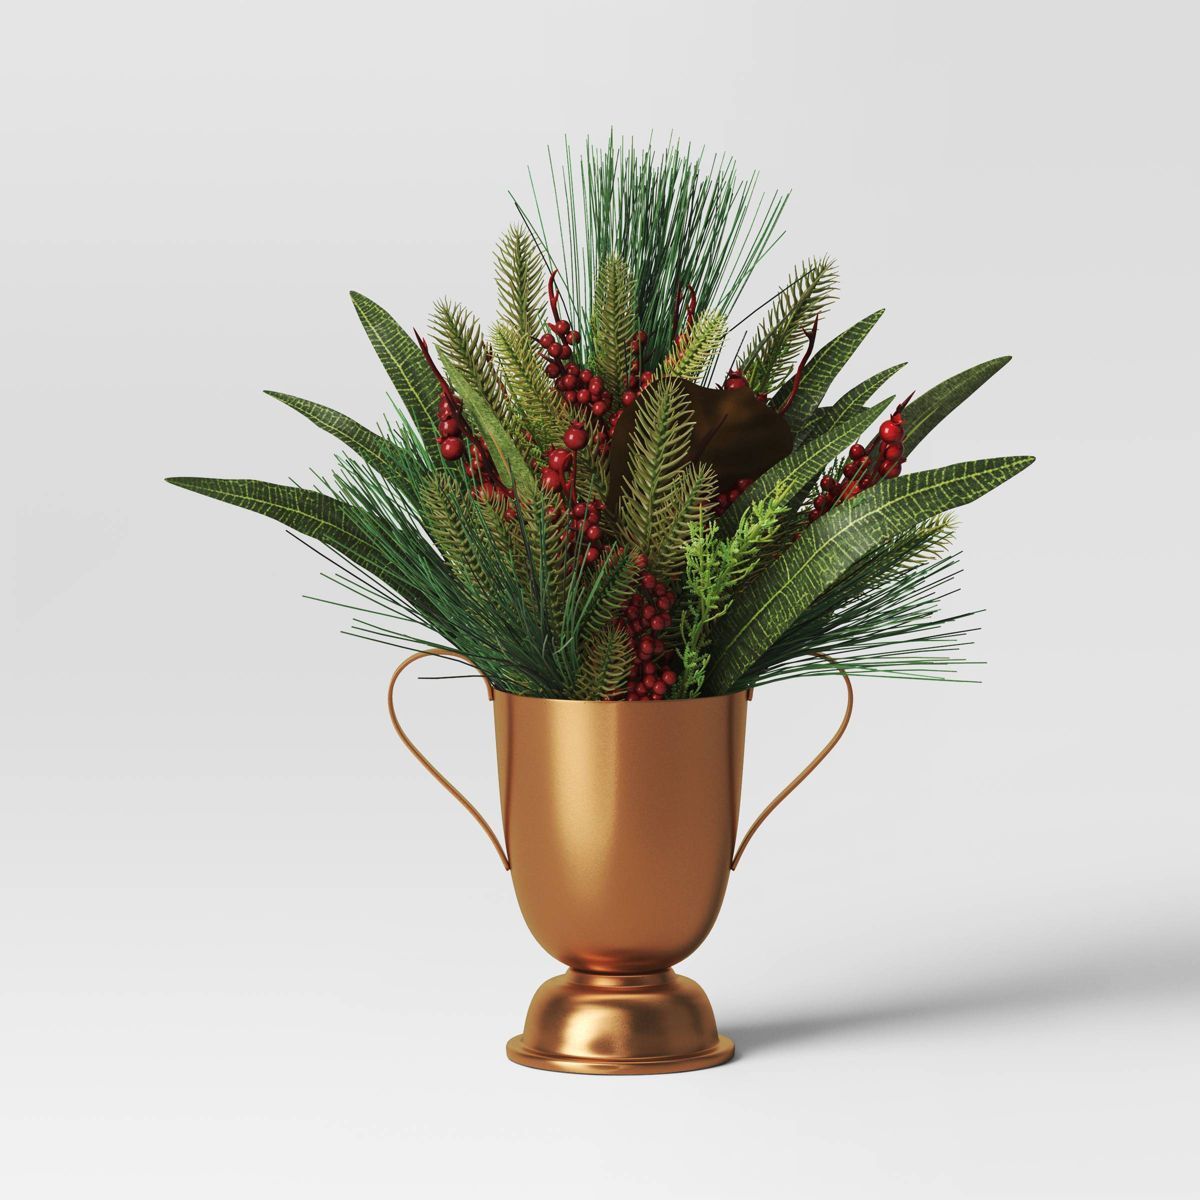 16" Mixed Greenery with Red Berries Christmas Artificial Plant in Bronze Vase - Wondershop™ | Target